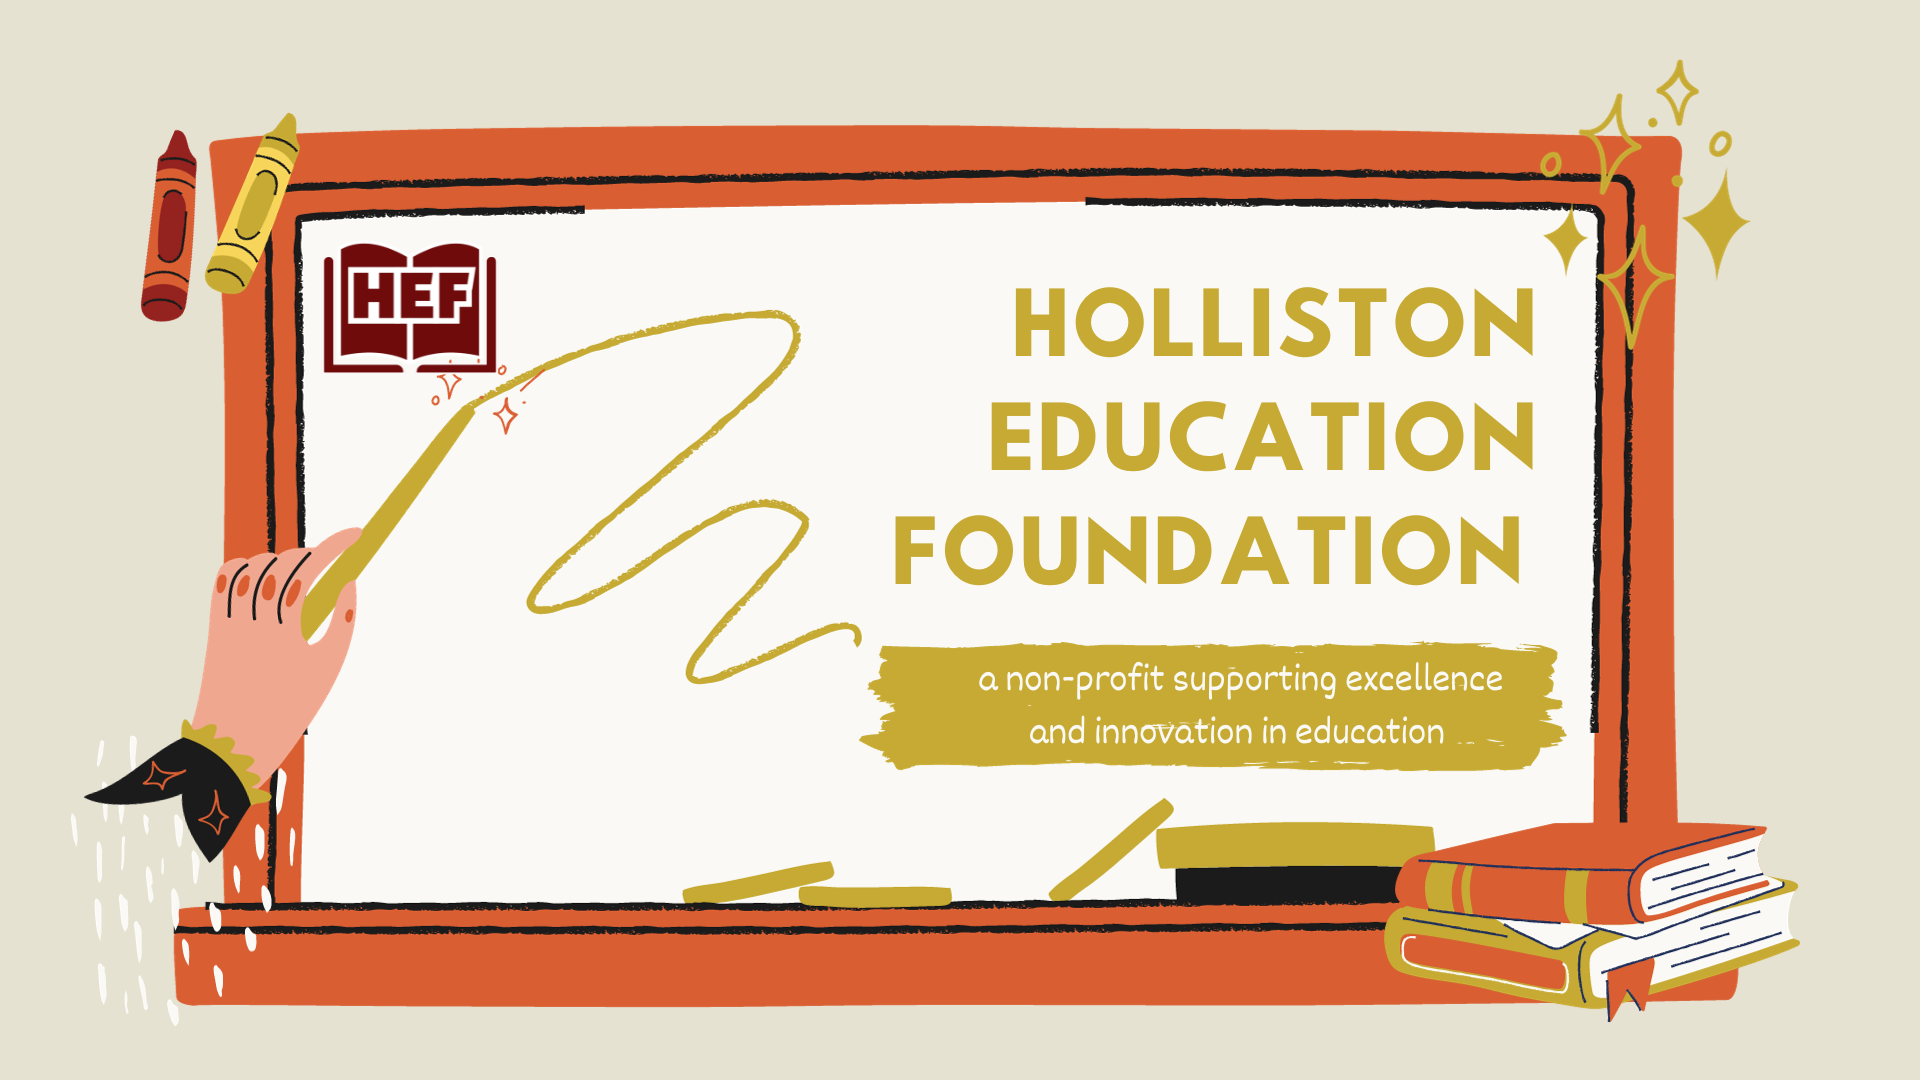 Holliston Education Foundation